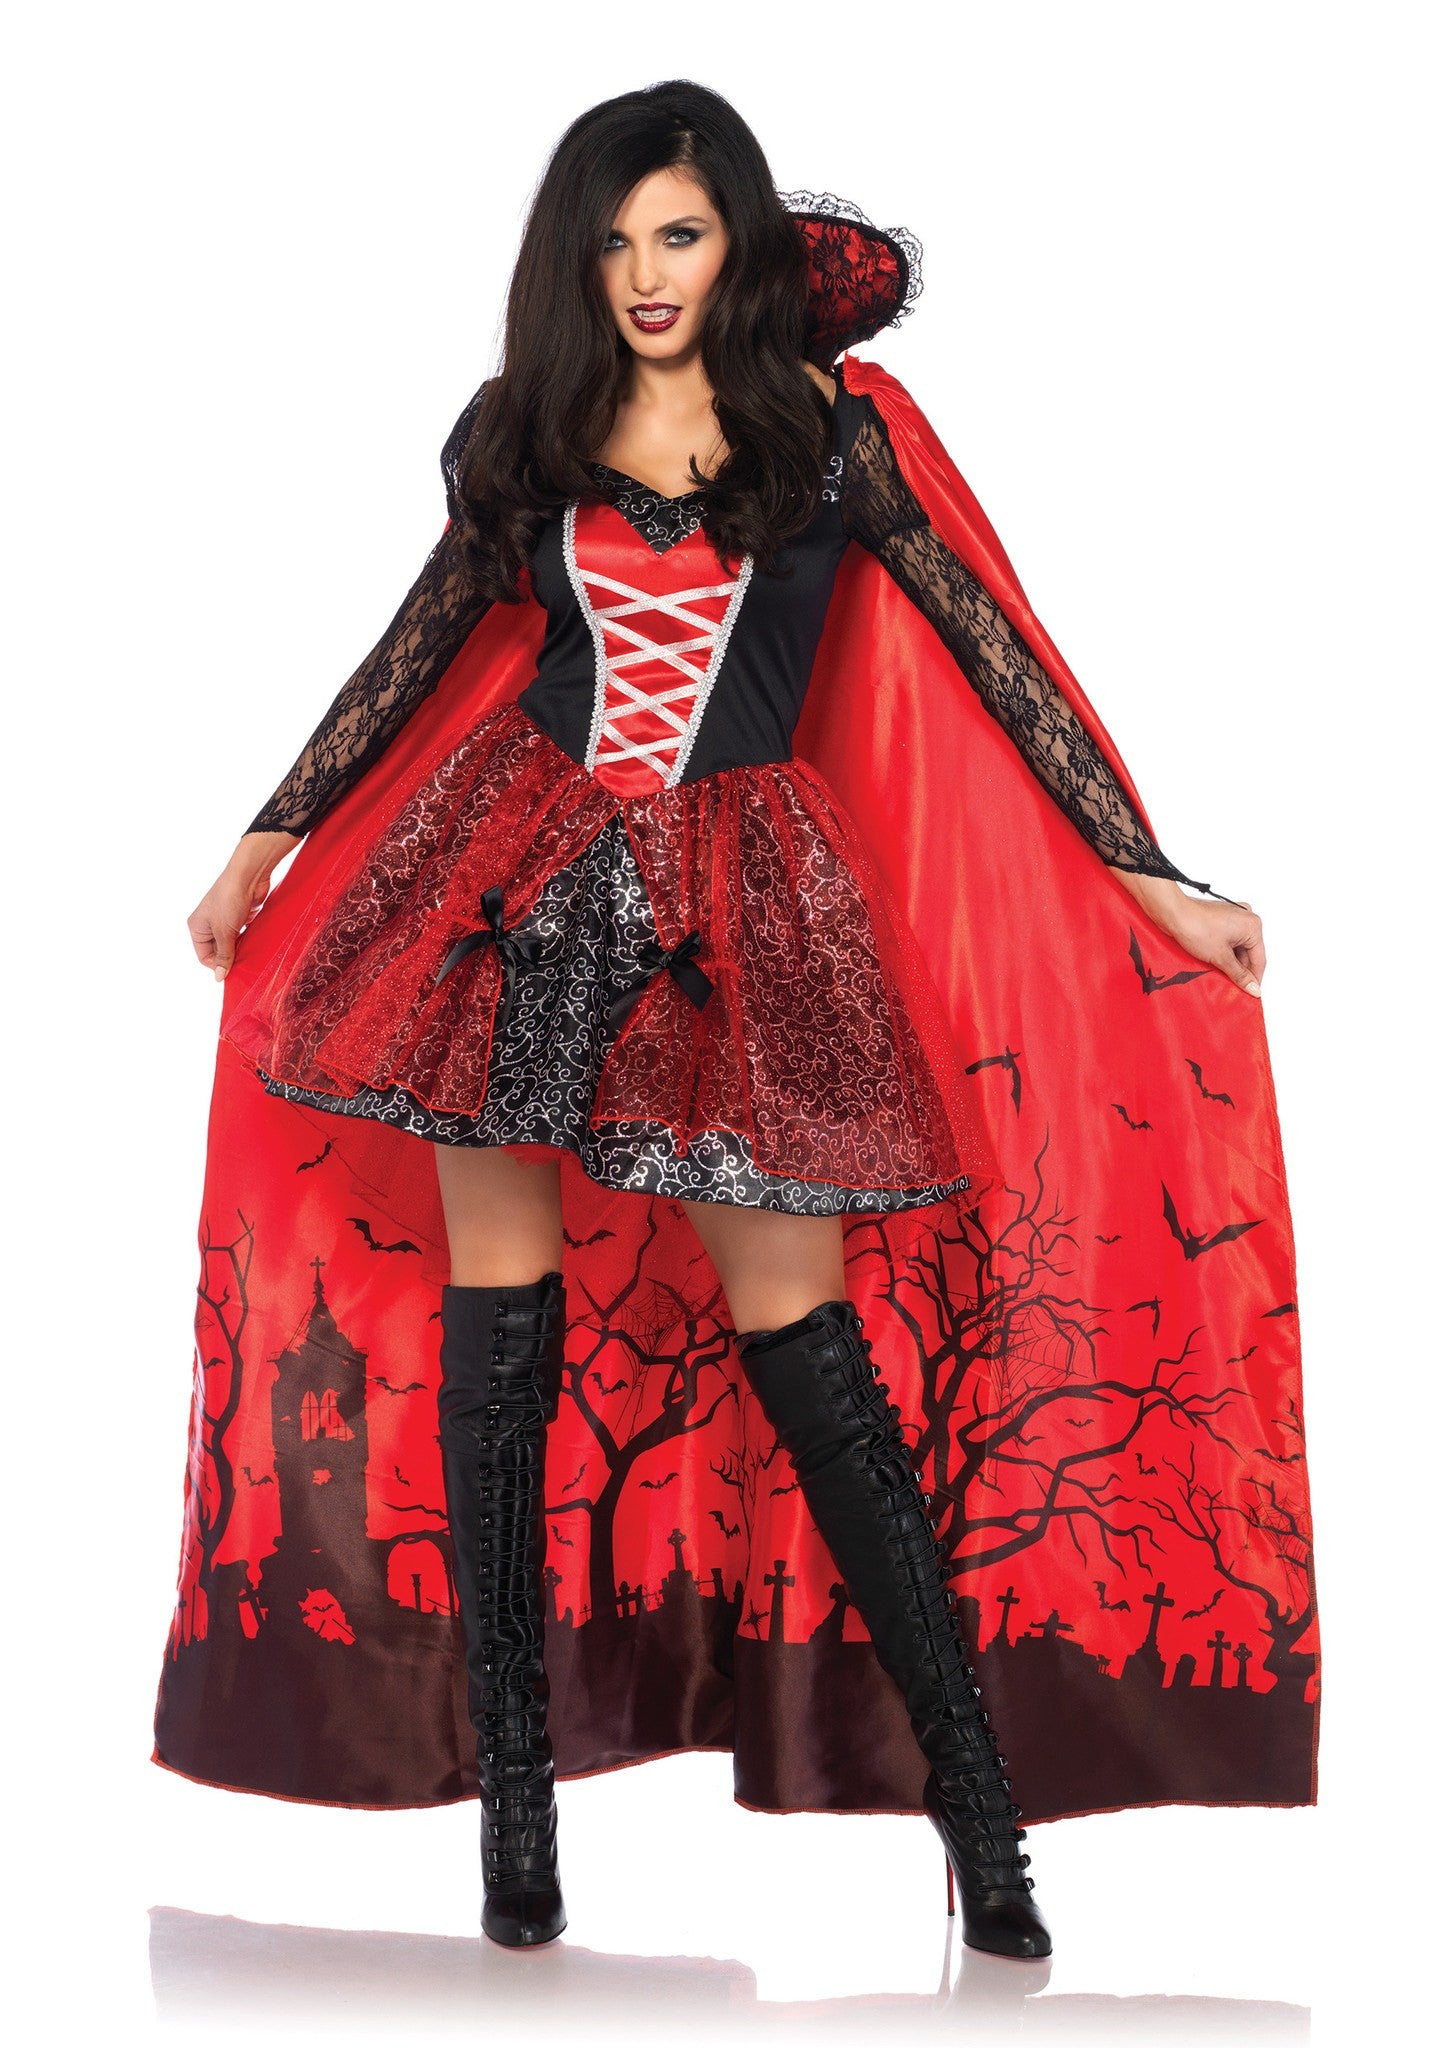 Costume - Vampire Temptress Costume